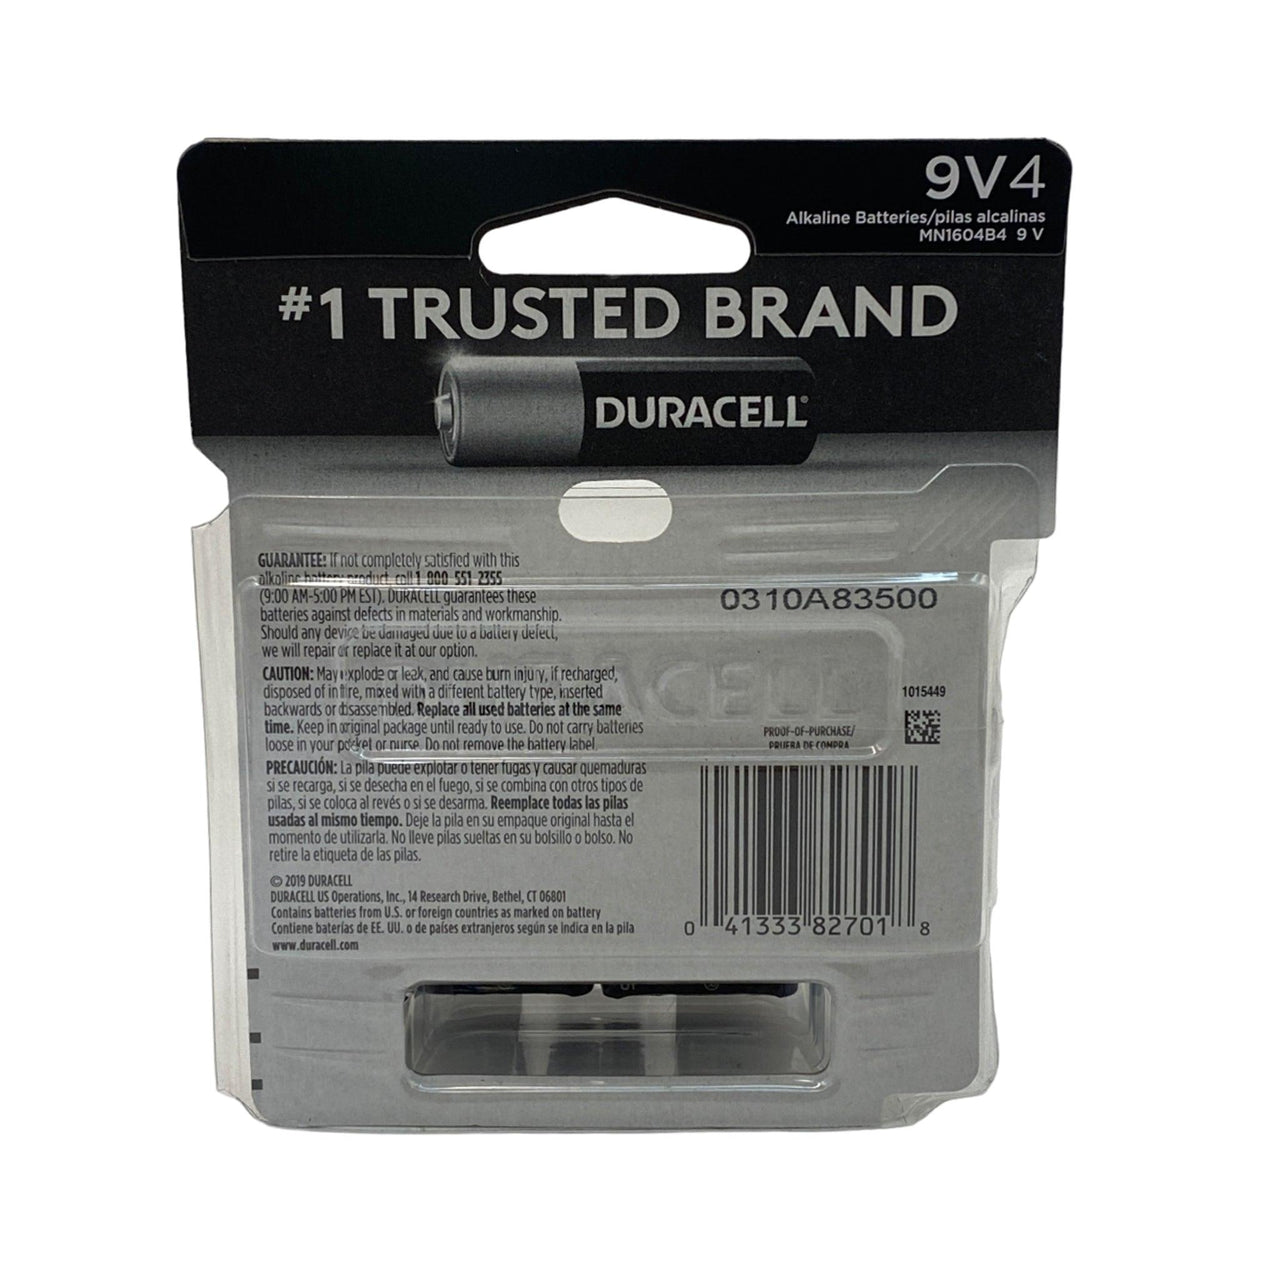 Duracell 9V4 Duracell Alkaline Batteries (12 Pcs Box) - Discount Wholesalers Inc